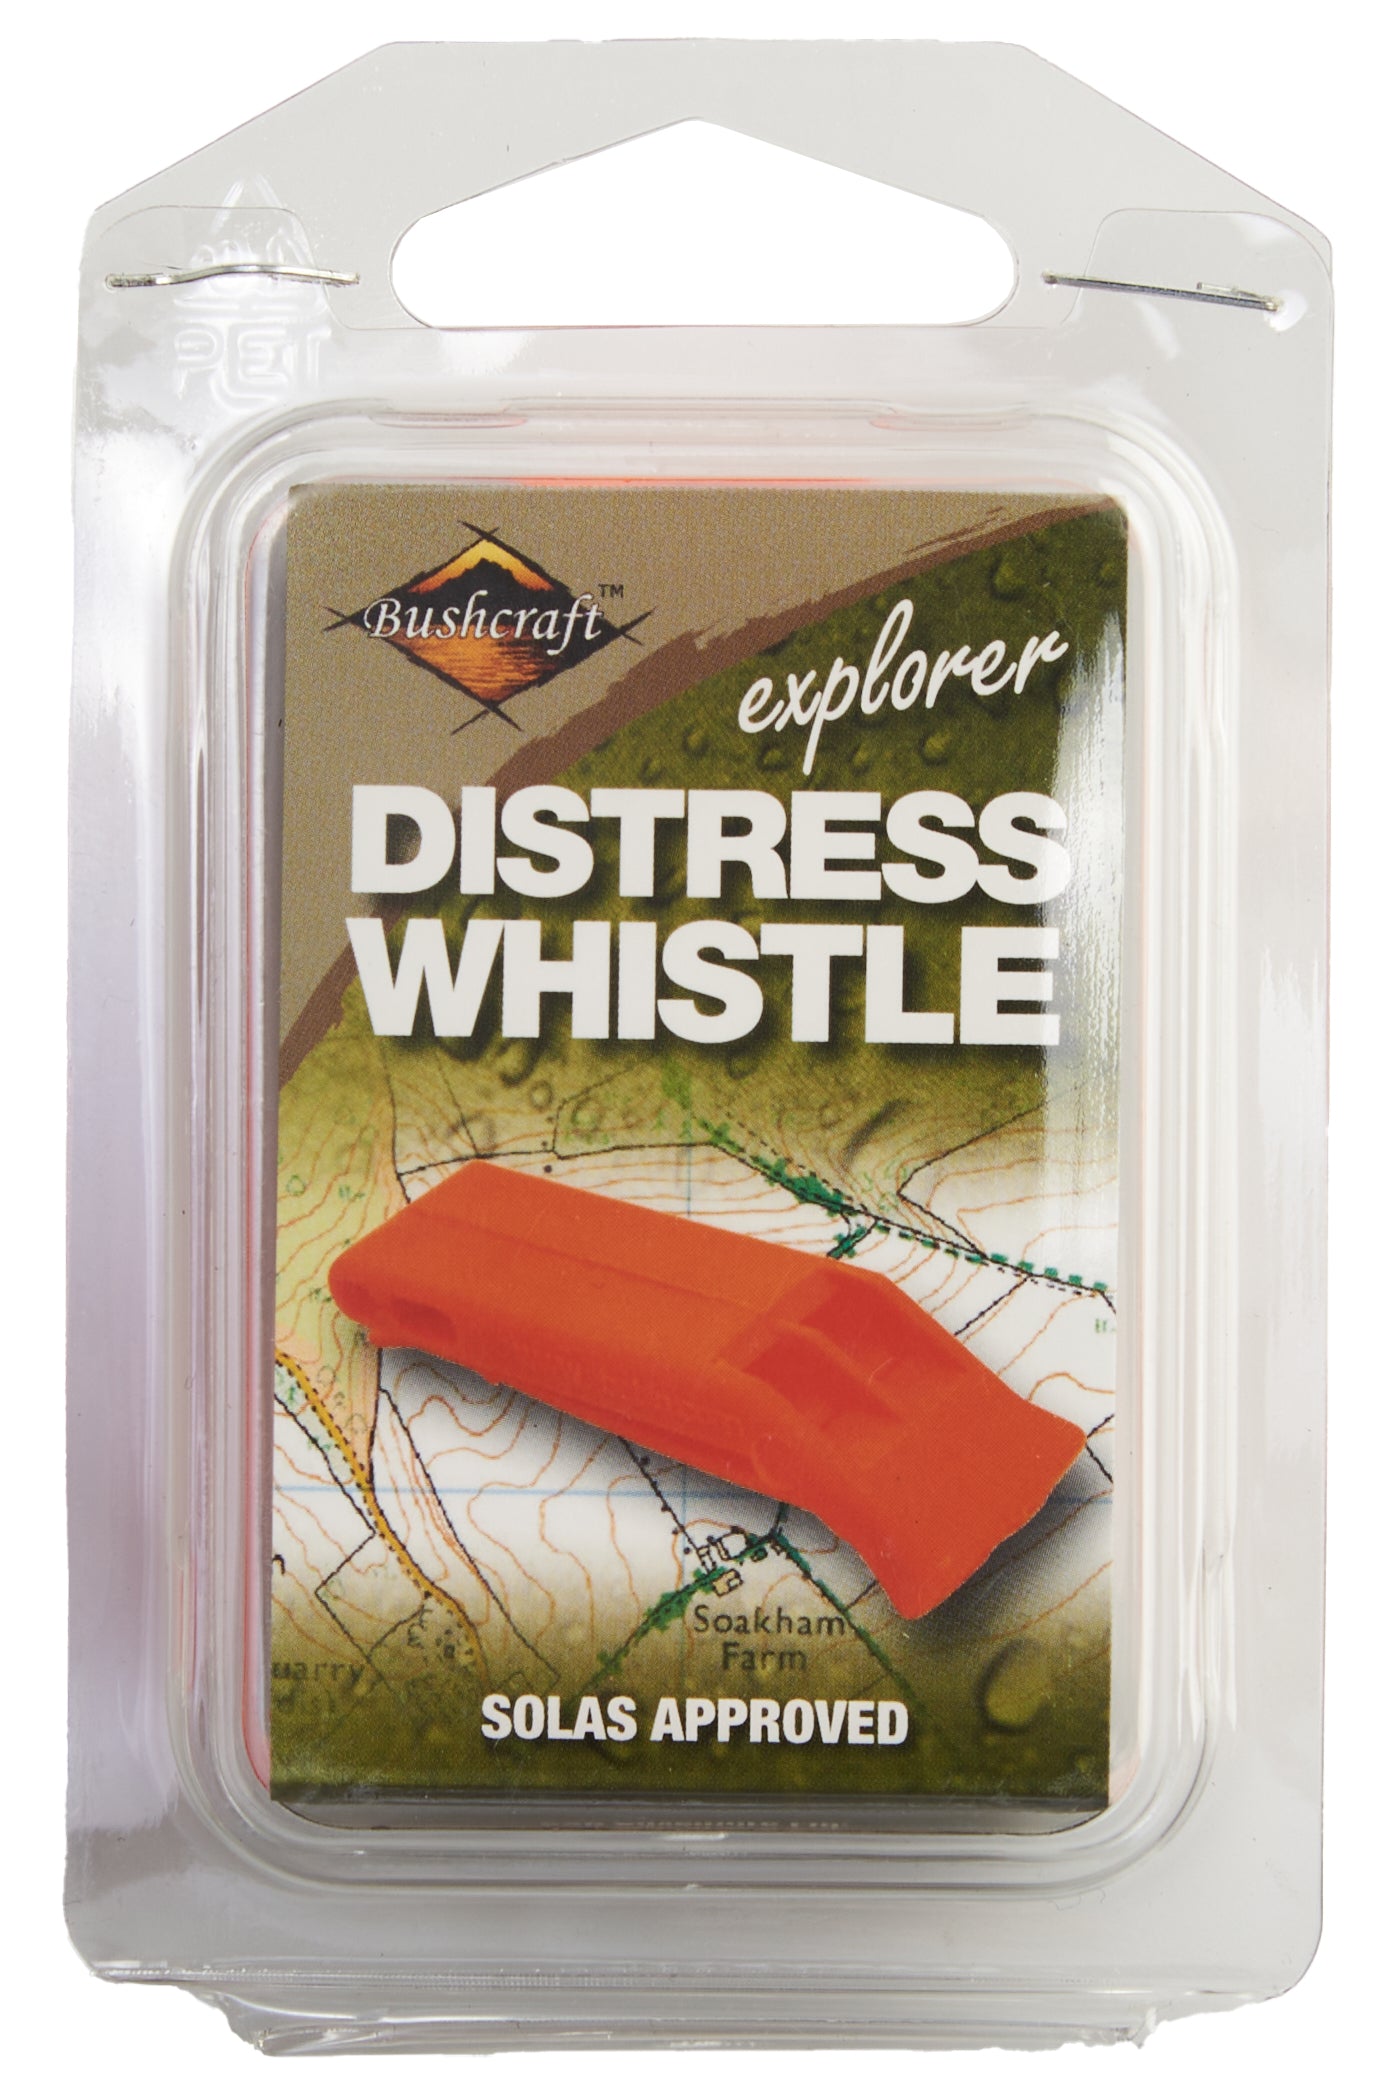 Distress Whistle (Bushcraft)(5-Pack)